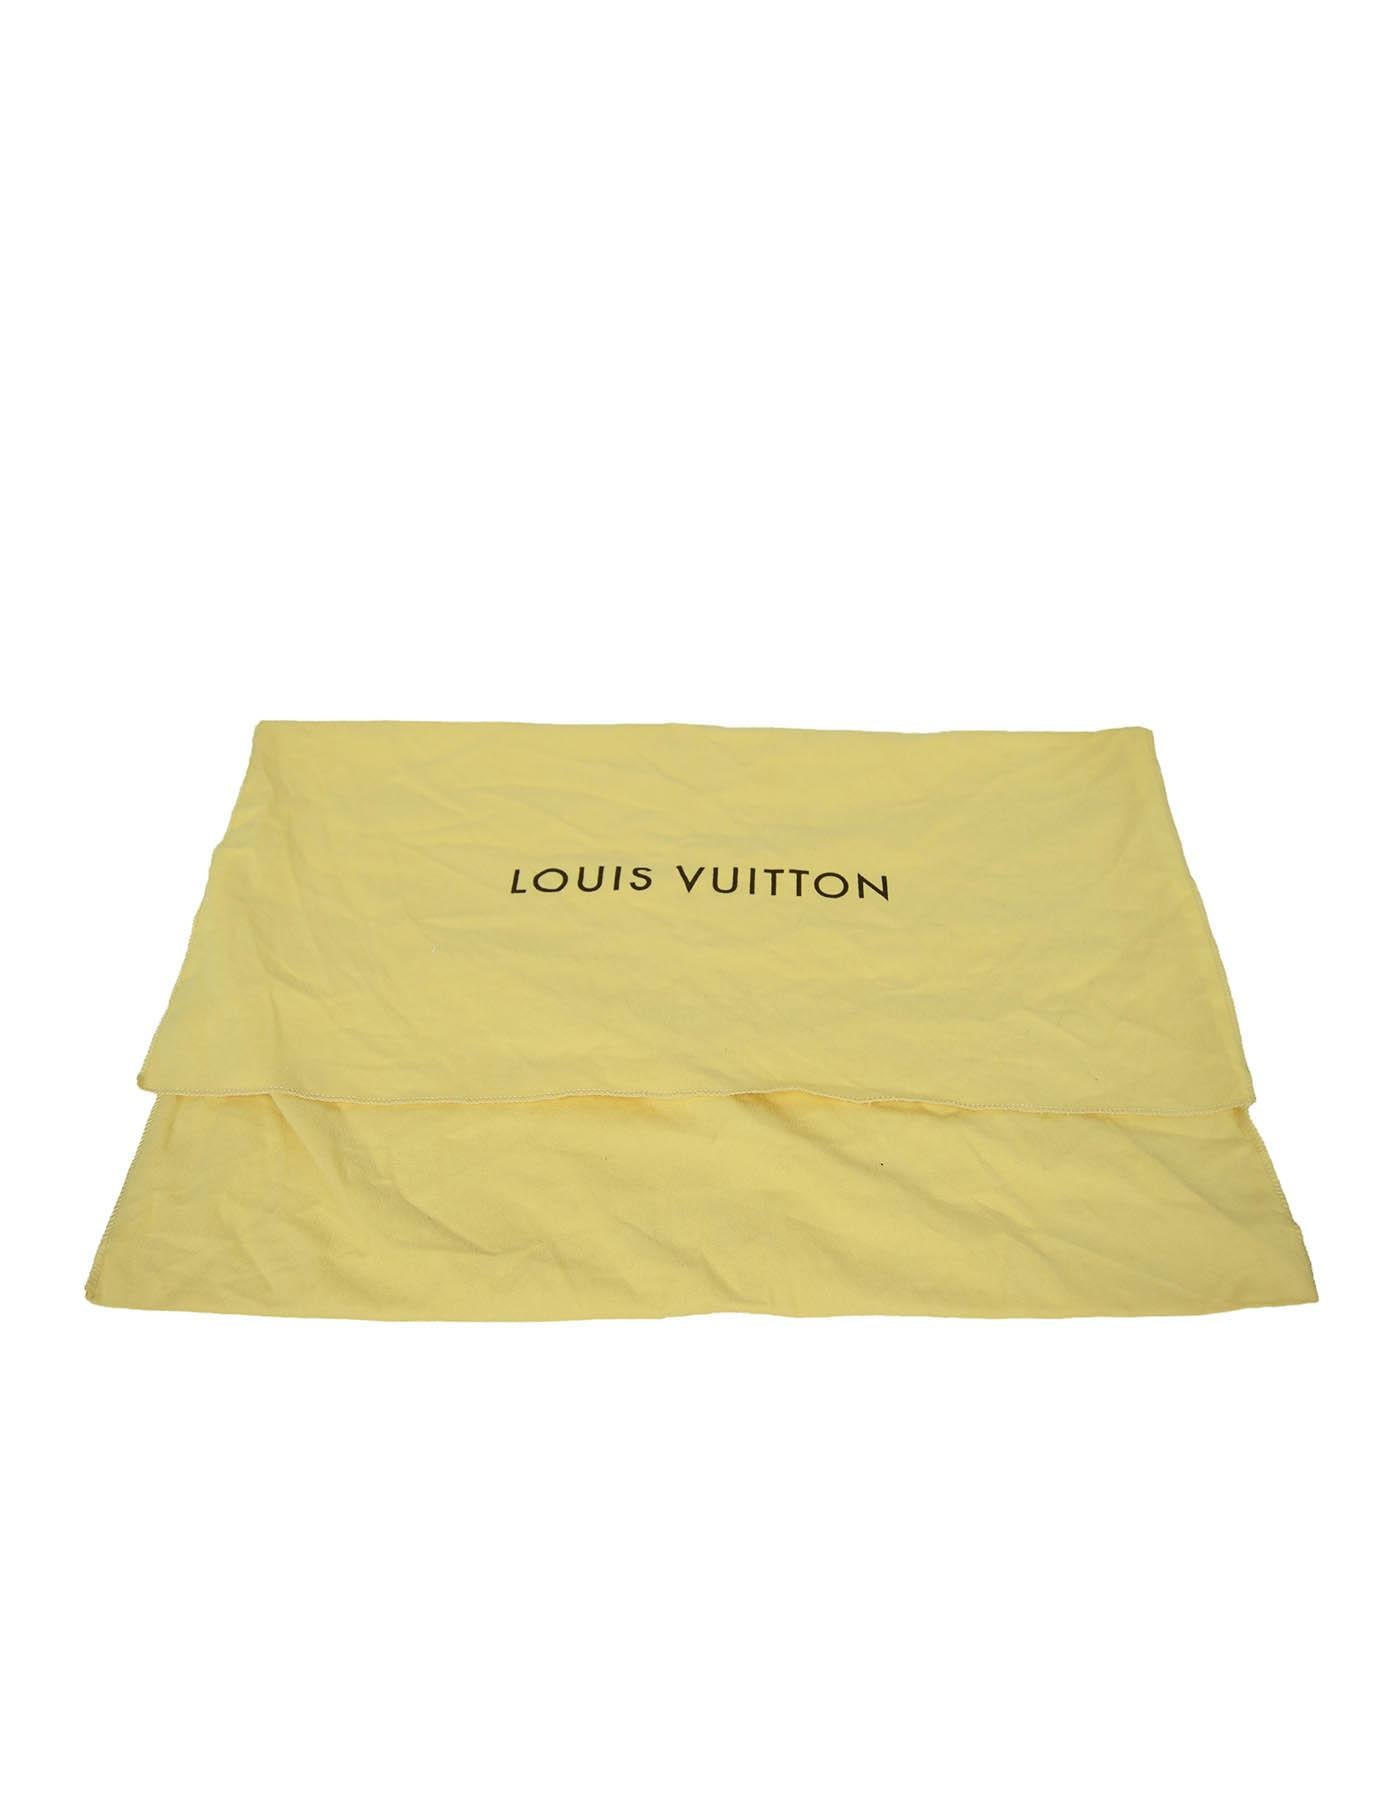 Louis Vuitton Black Electric Epi Patent Leather Alma PM Top Handle Bag 2